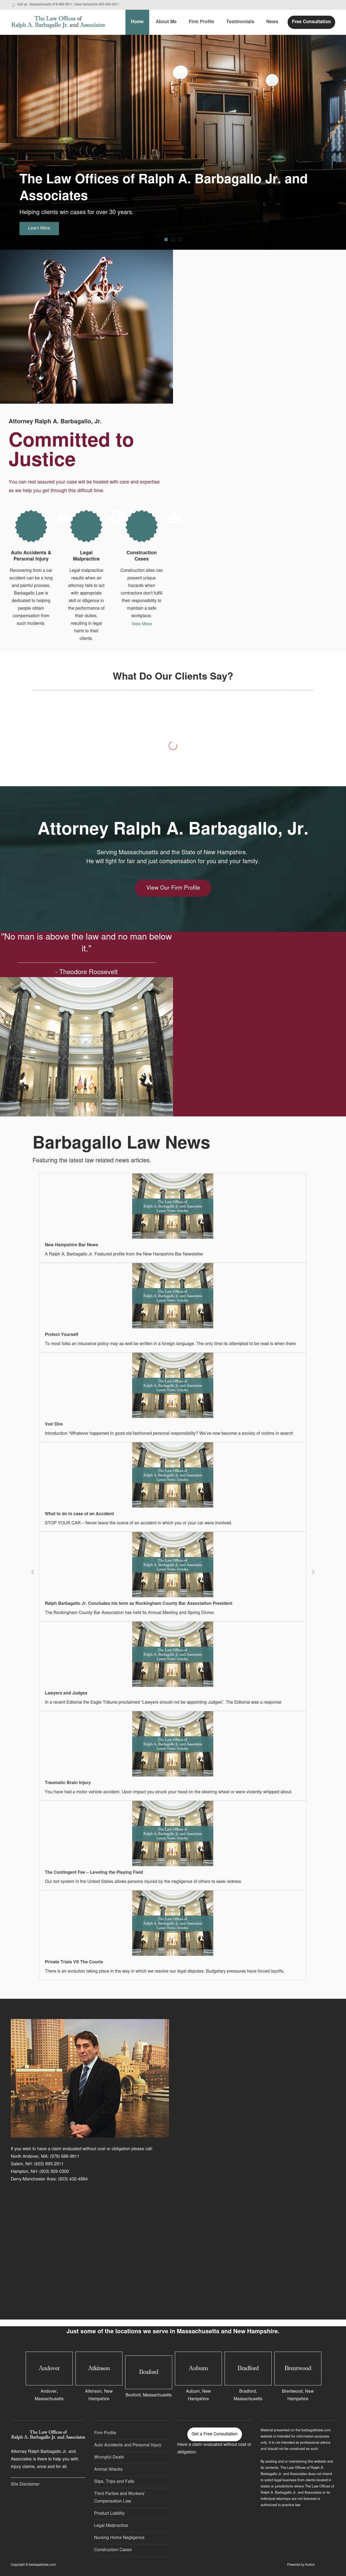 Ralph A. Barbagallo Jr. & Associates - Salem NH Lawyers